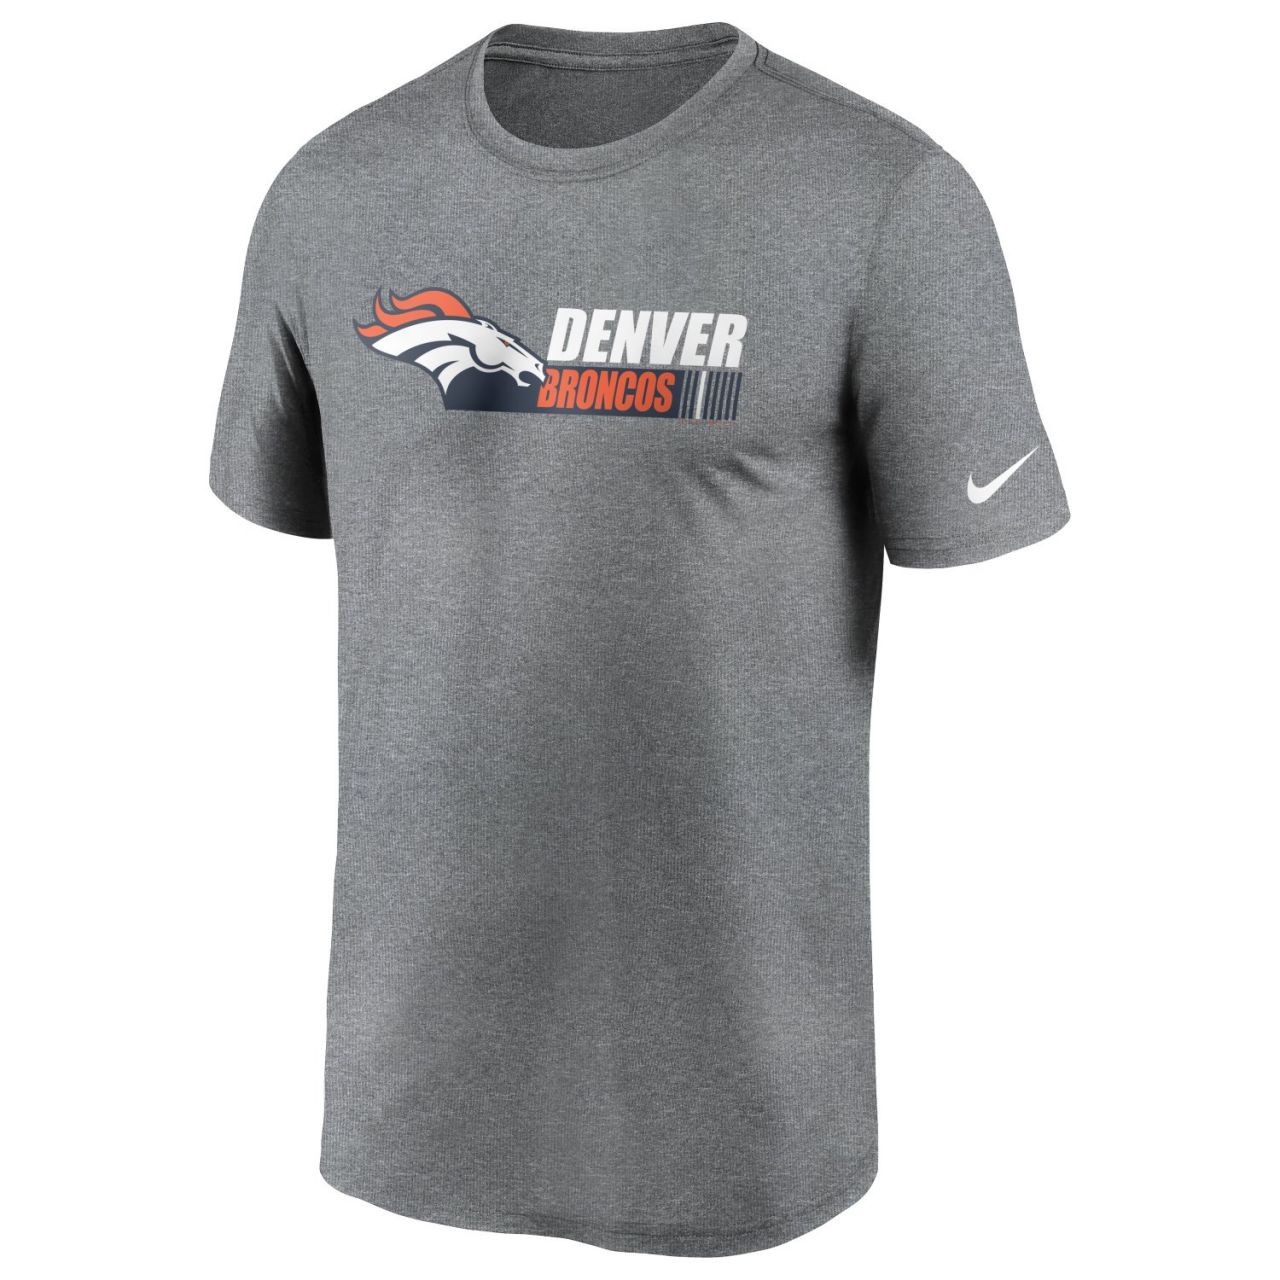 amfoo - Nike Dri-FIT Legend Shirt - PRIMETIME Denver Broncos